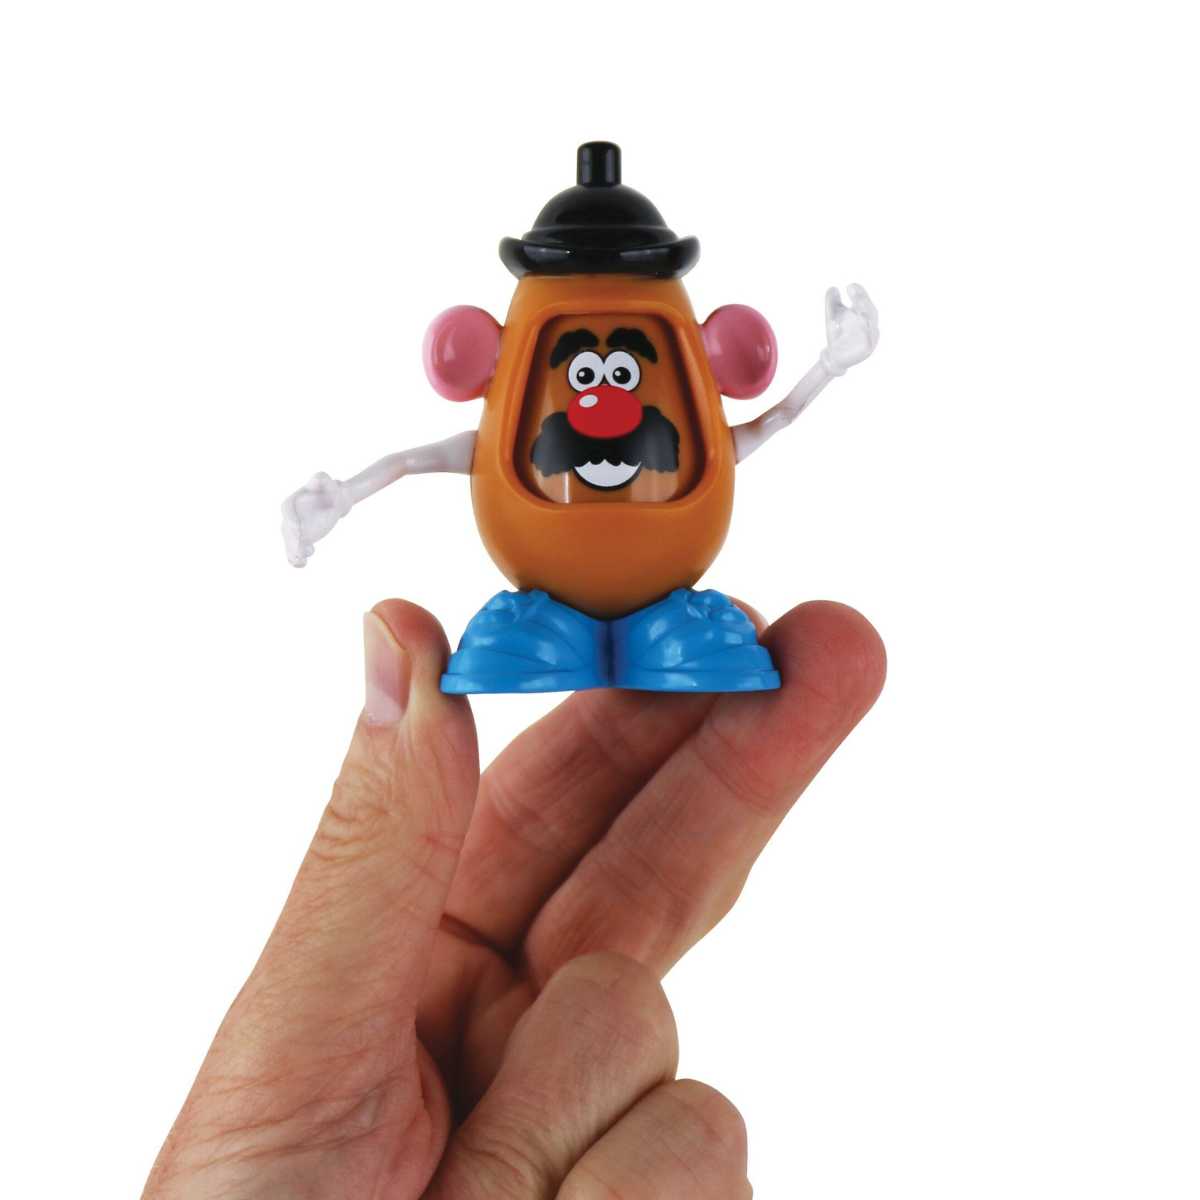 World's Smallest Mr Potato Head Toy - Retro Collectible - Simon's Collectibles